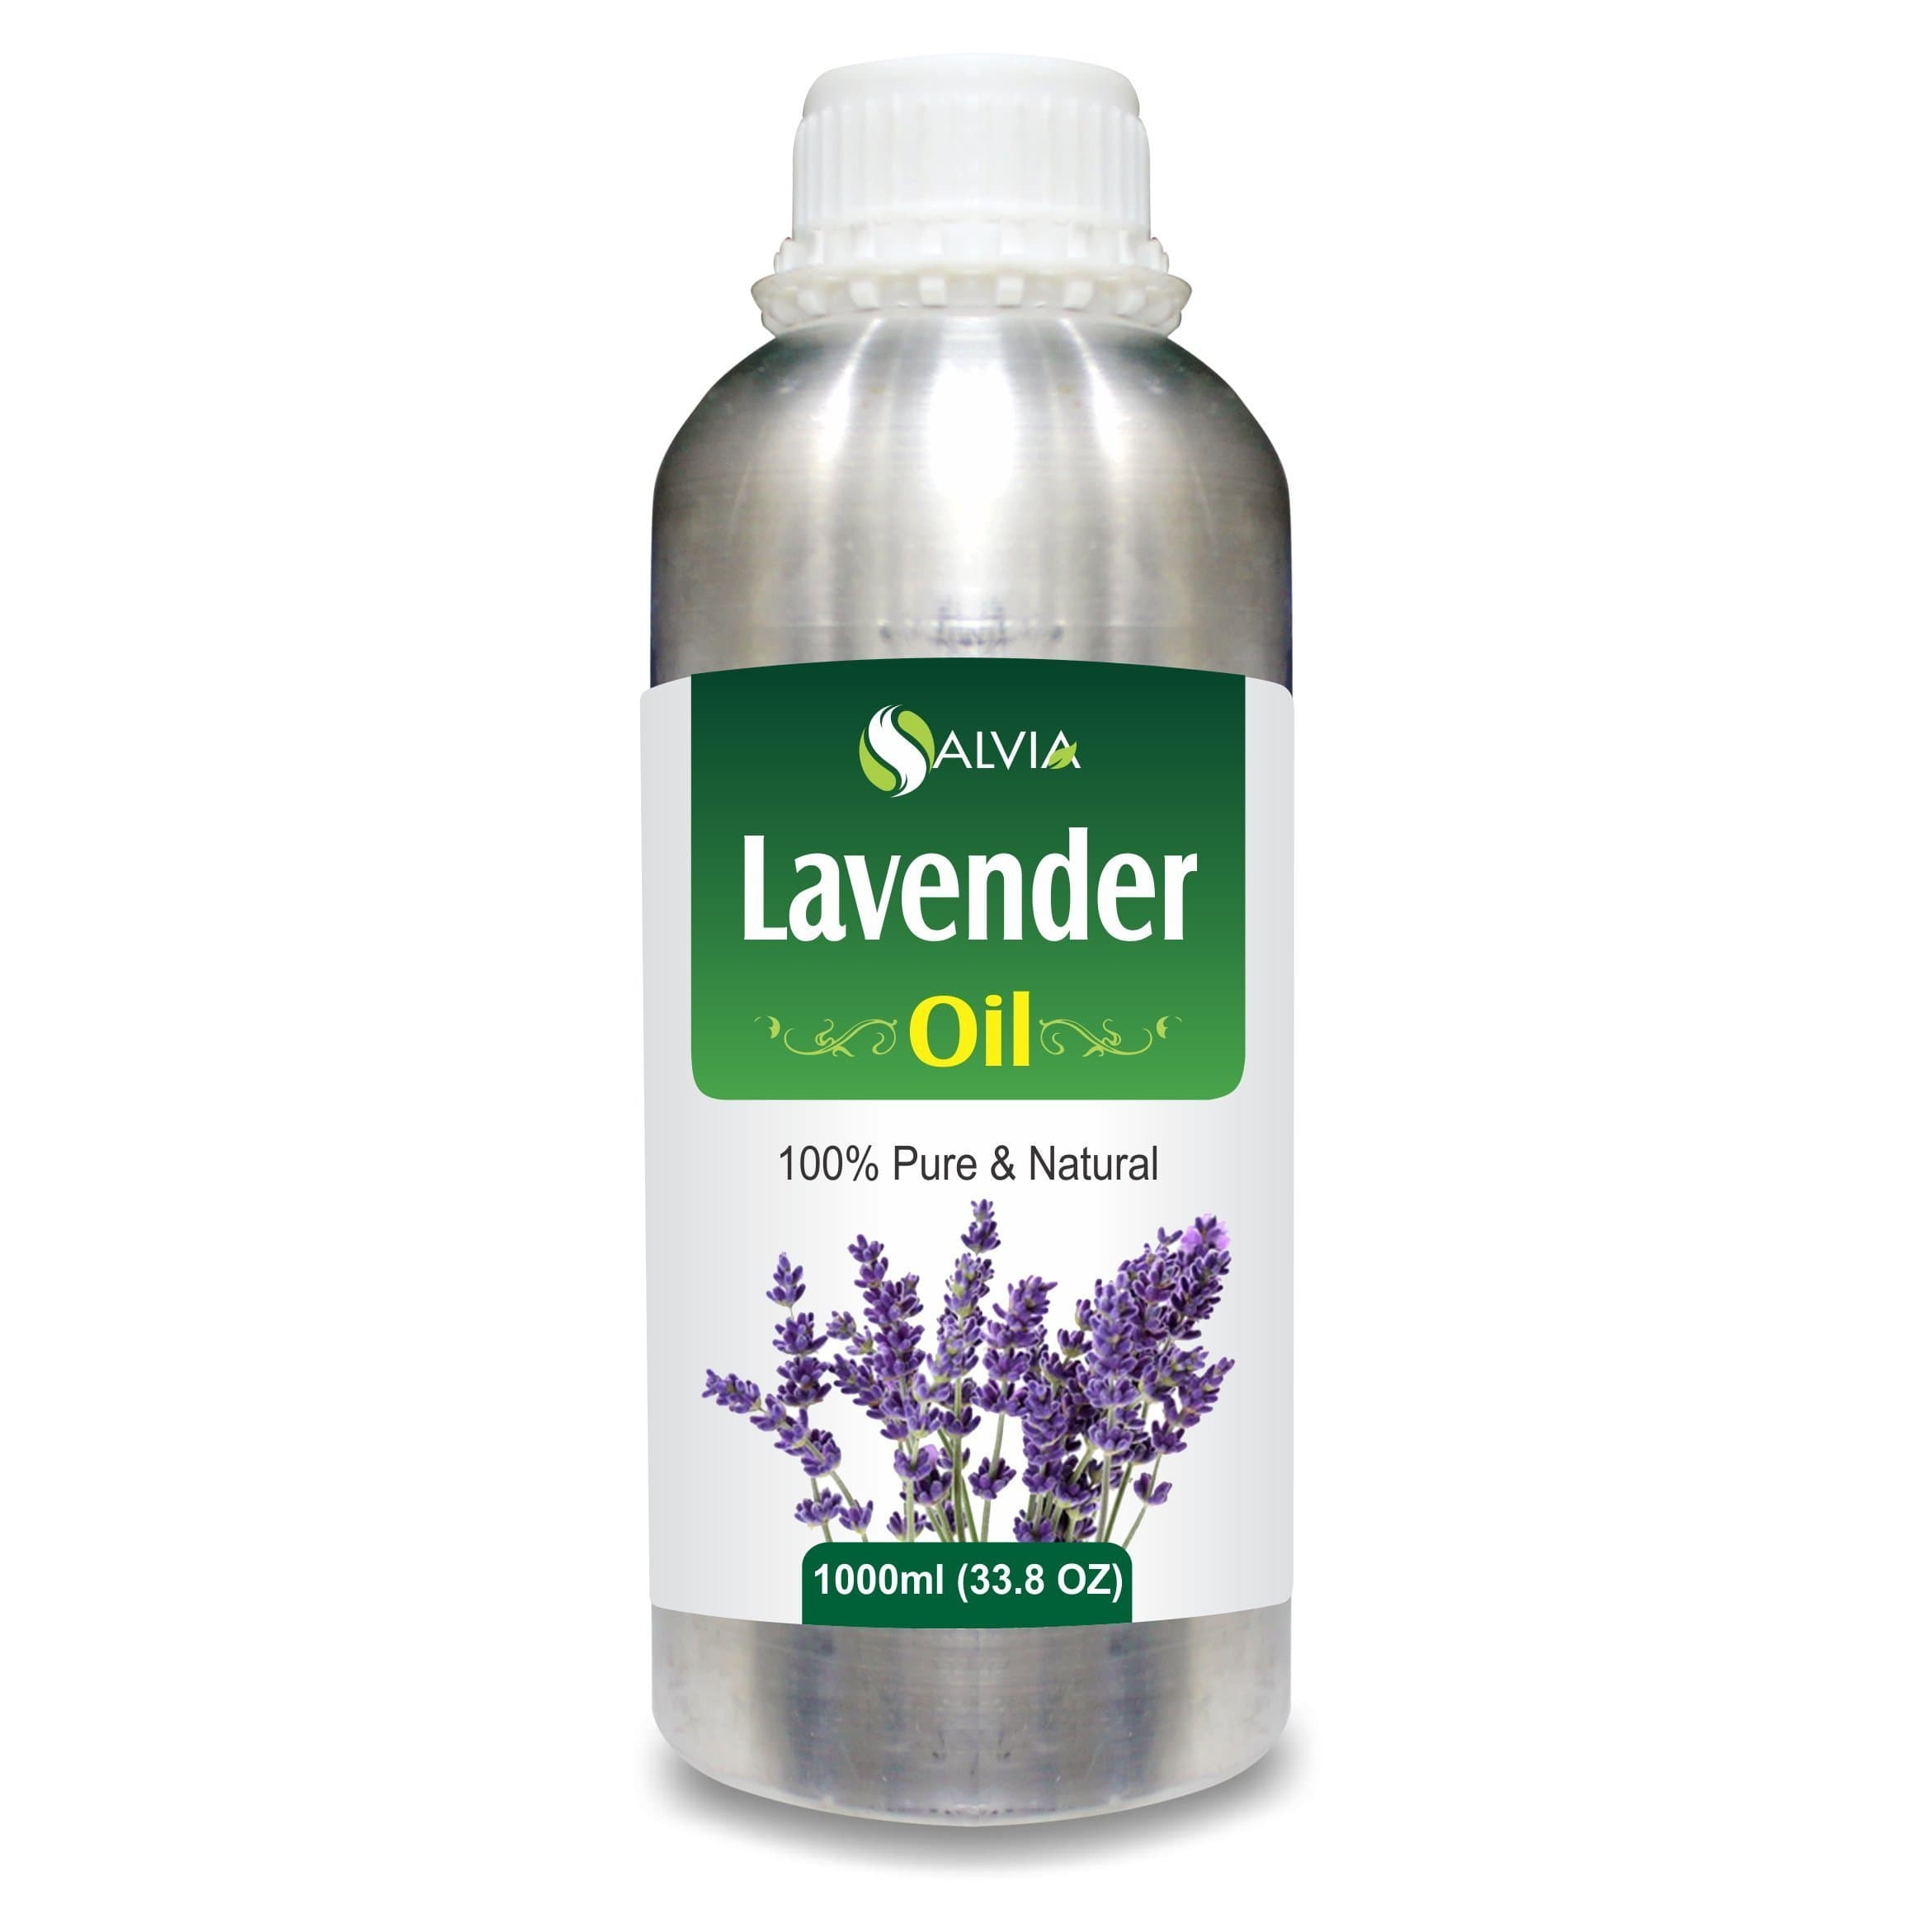 lavender essential oil for diffuser